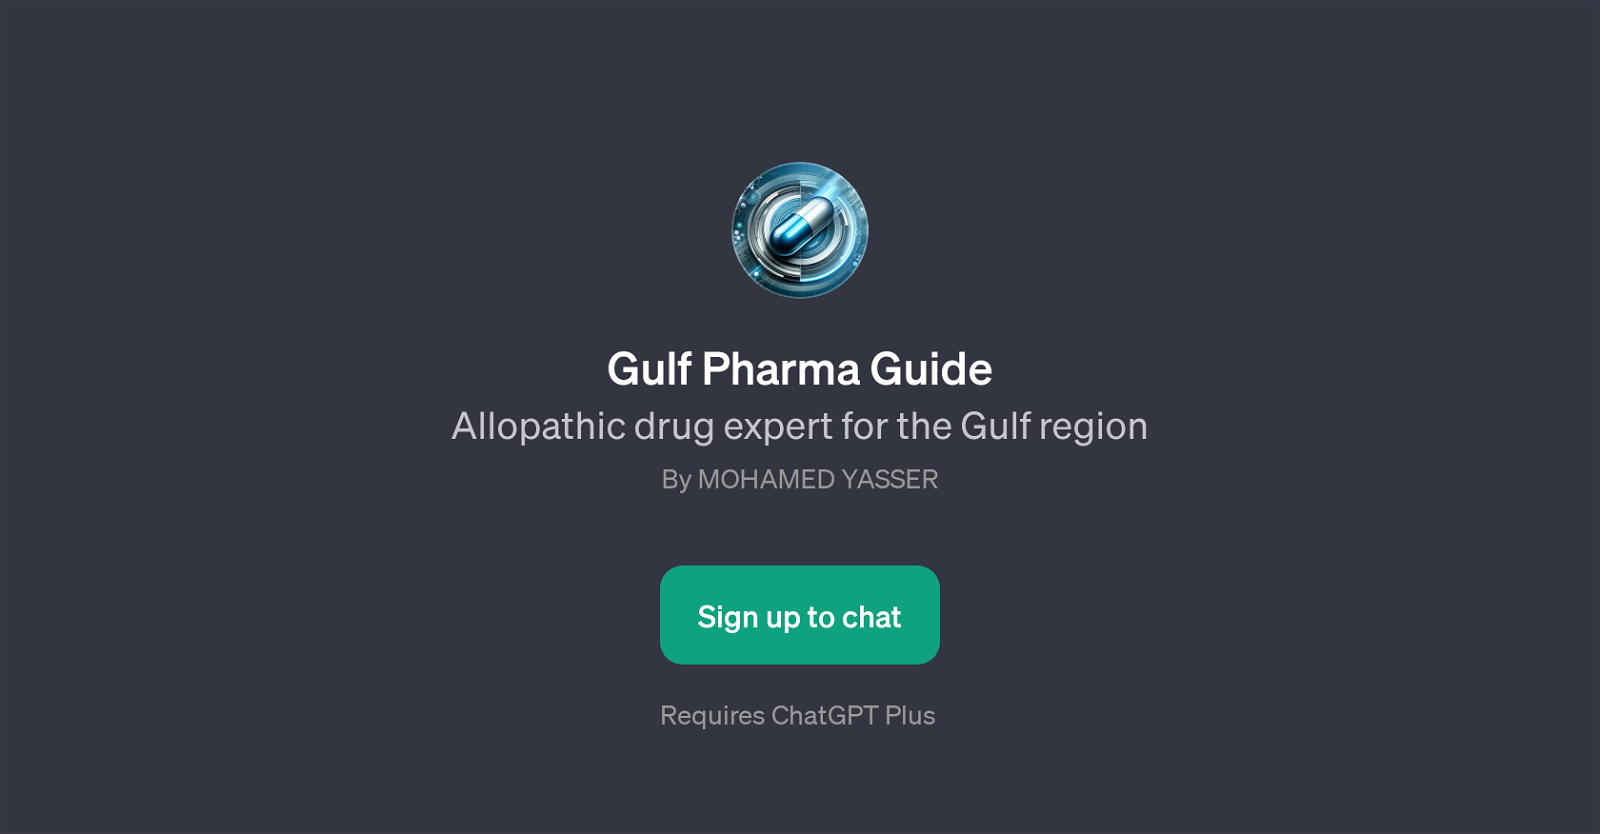 Gulf Pharma Guide website